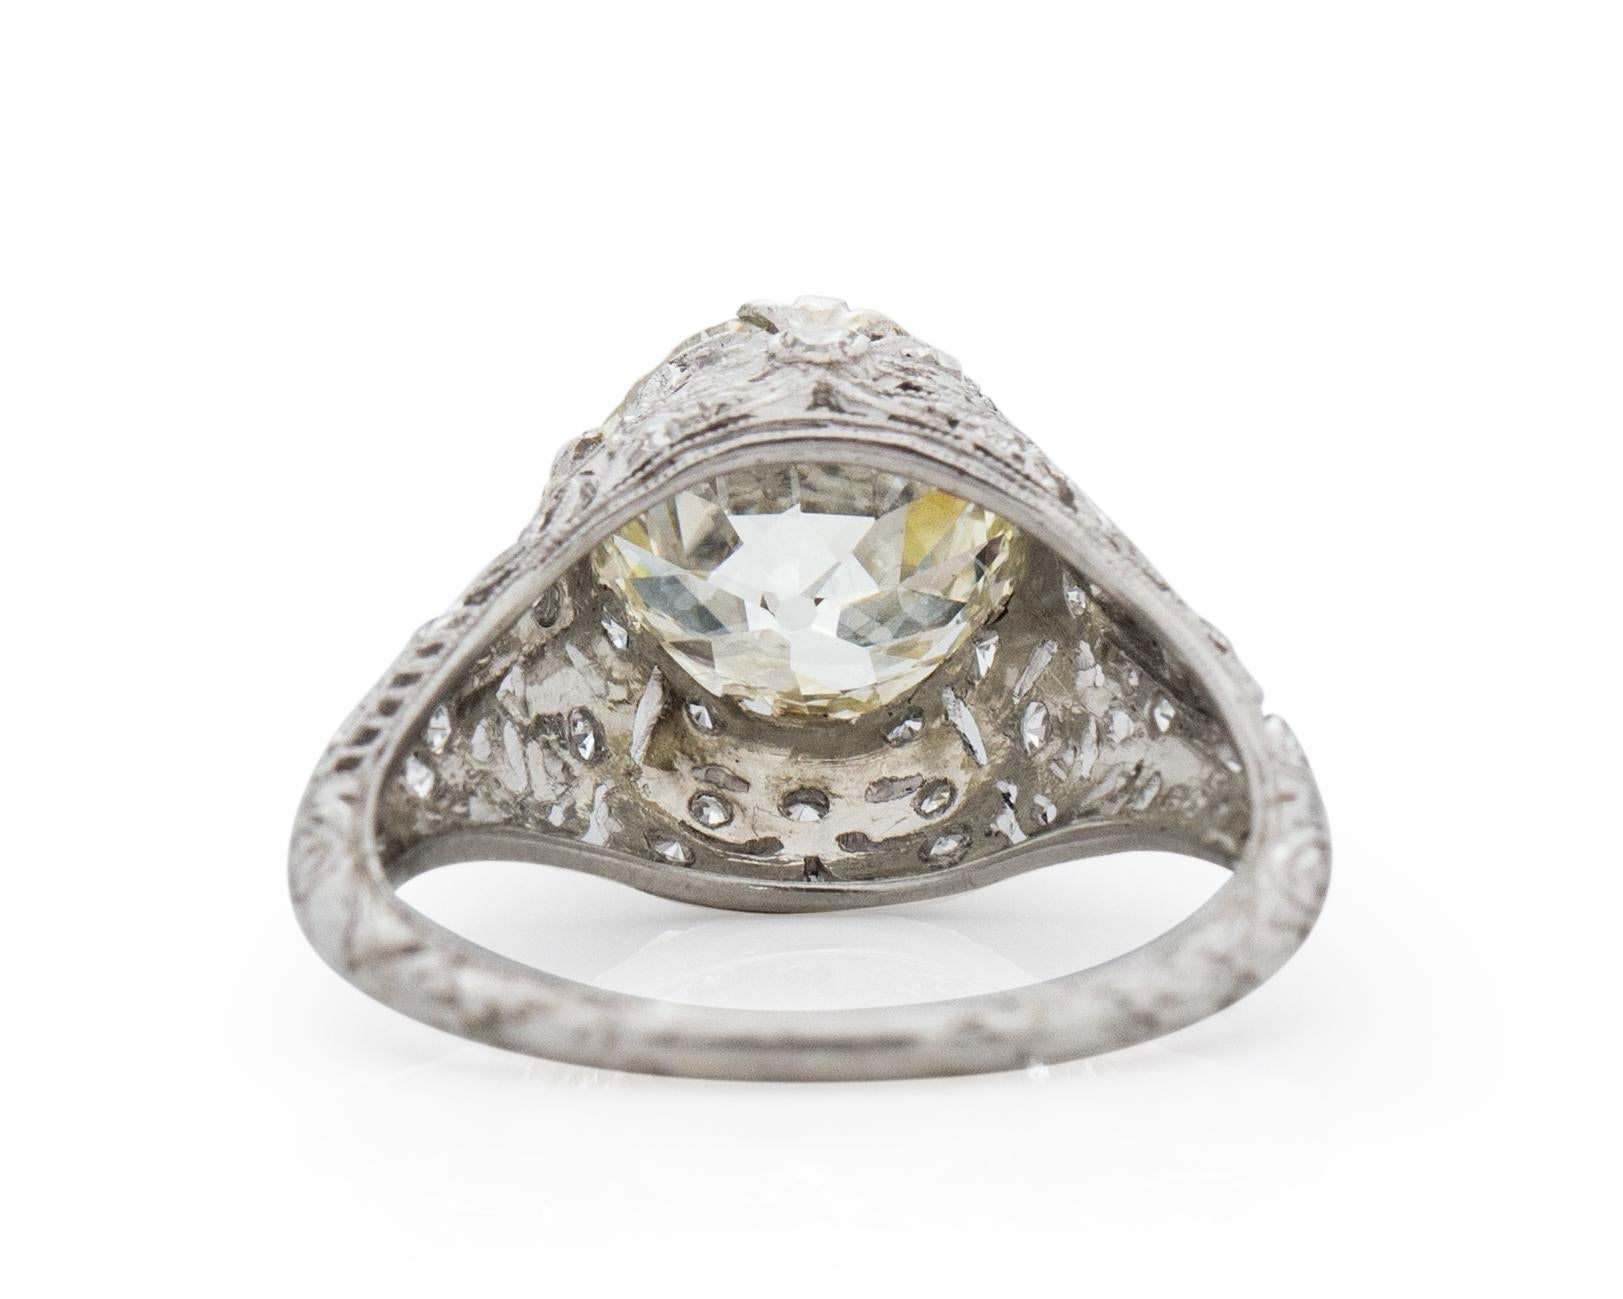 Round Cut Edwardian 2.89 Carat GIA Diamond Platinum Engagement Ring with Carved Bow Motif